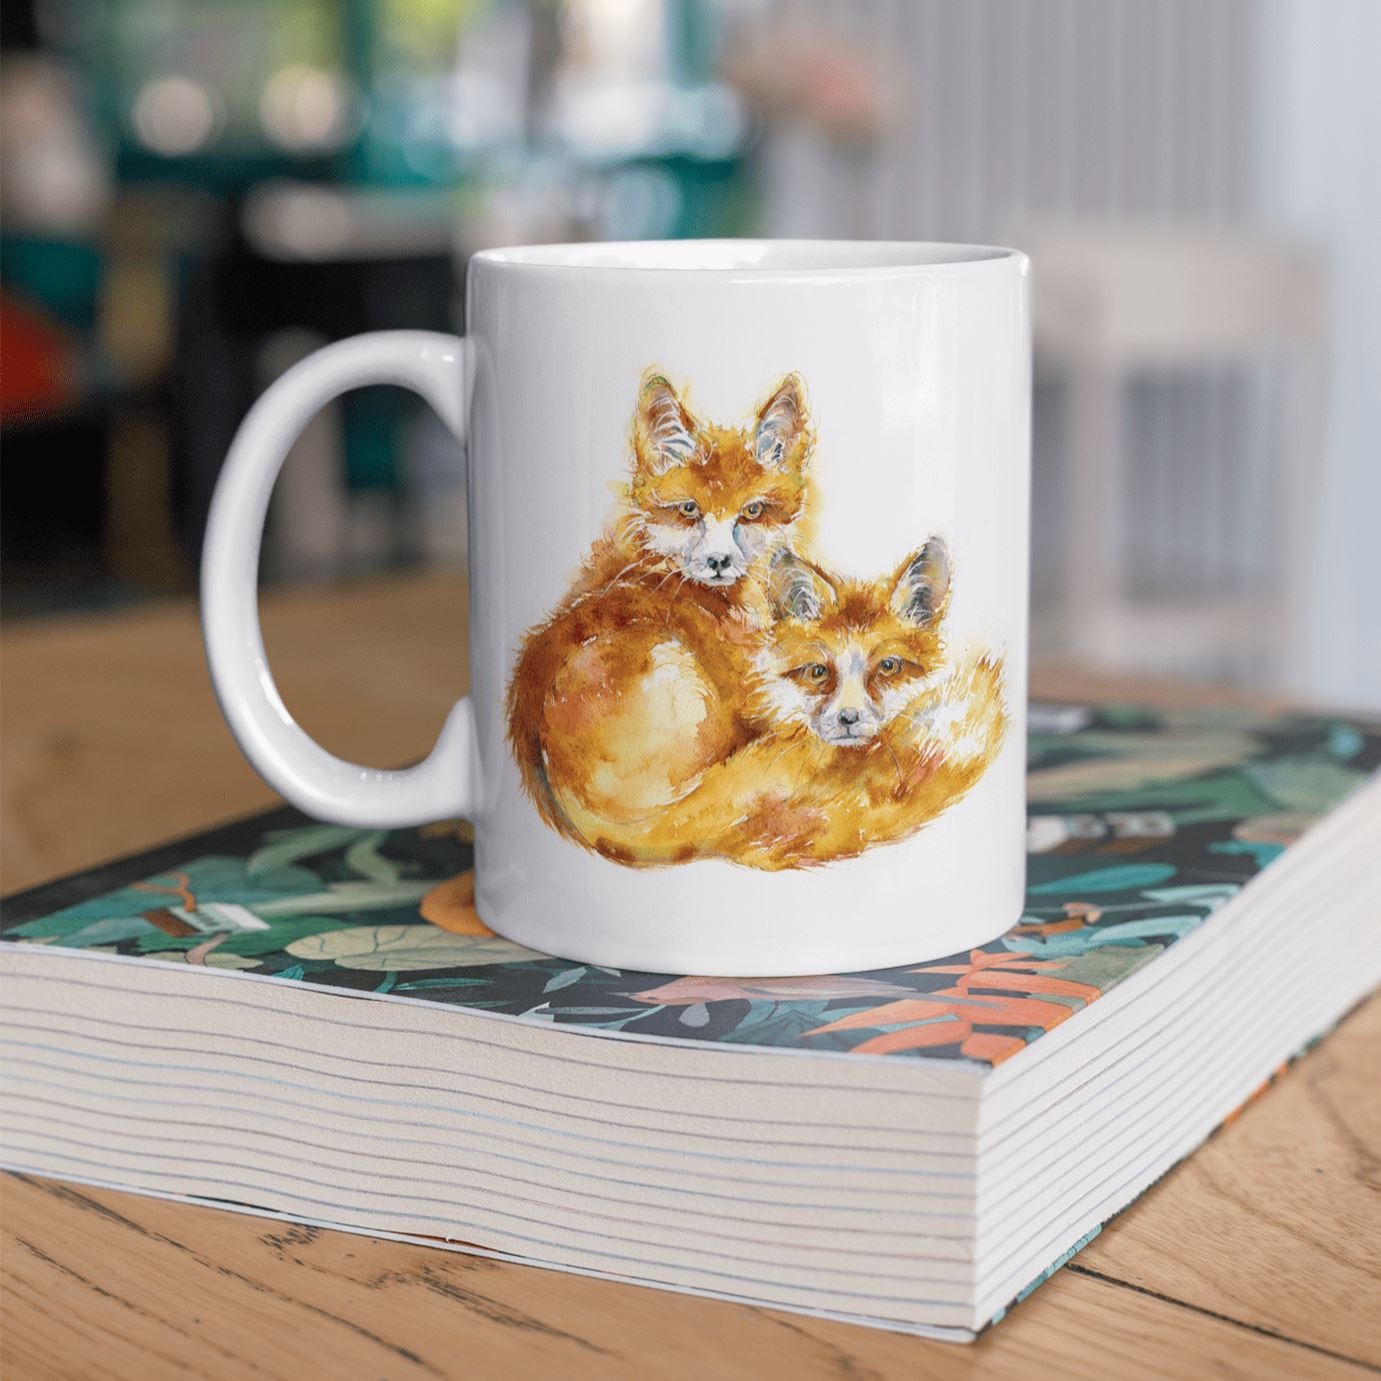 Wild Red Fox Ceramic Mug designed by artist Sheila Gill